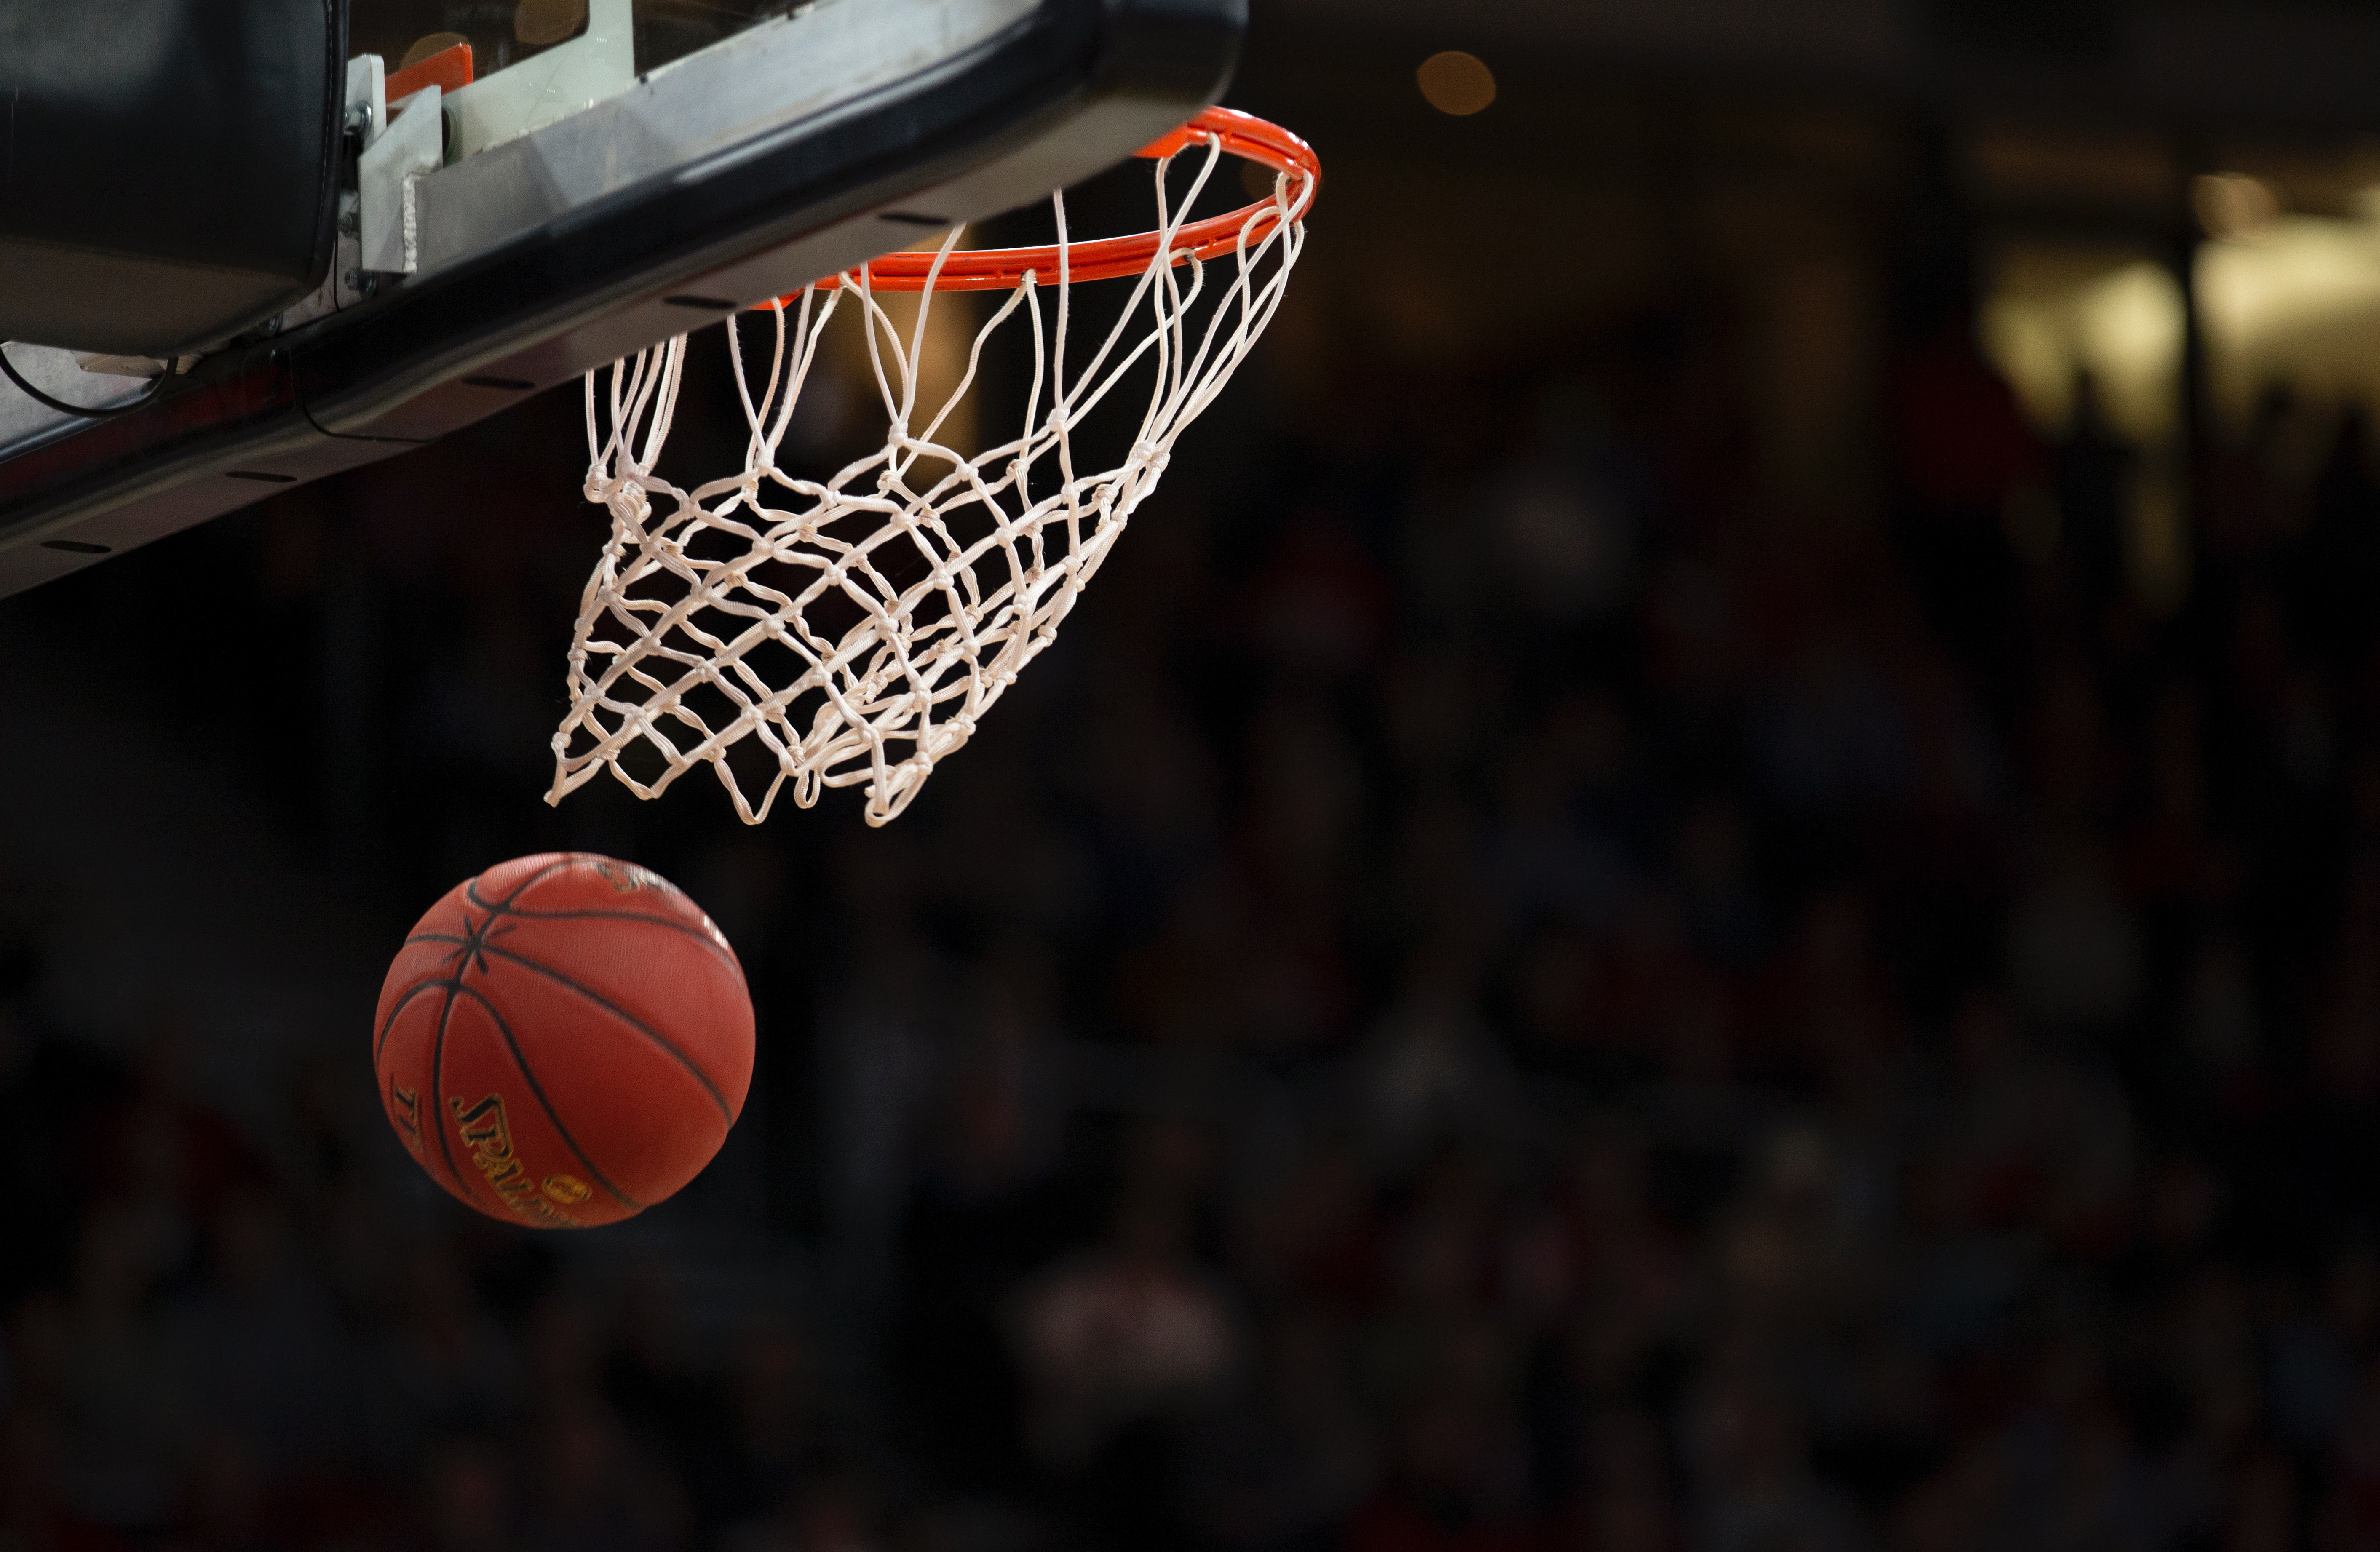 NBA basketball being thrown into a basketball hoop